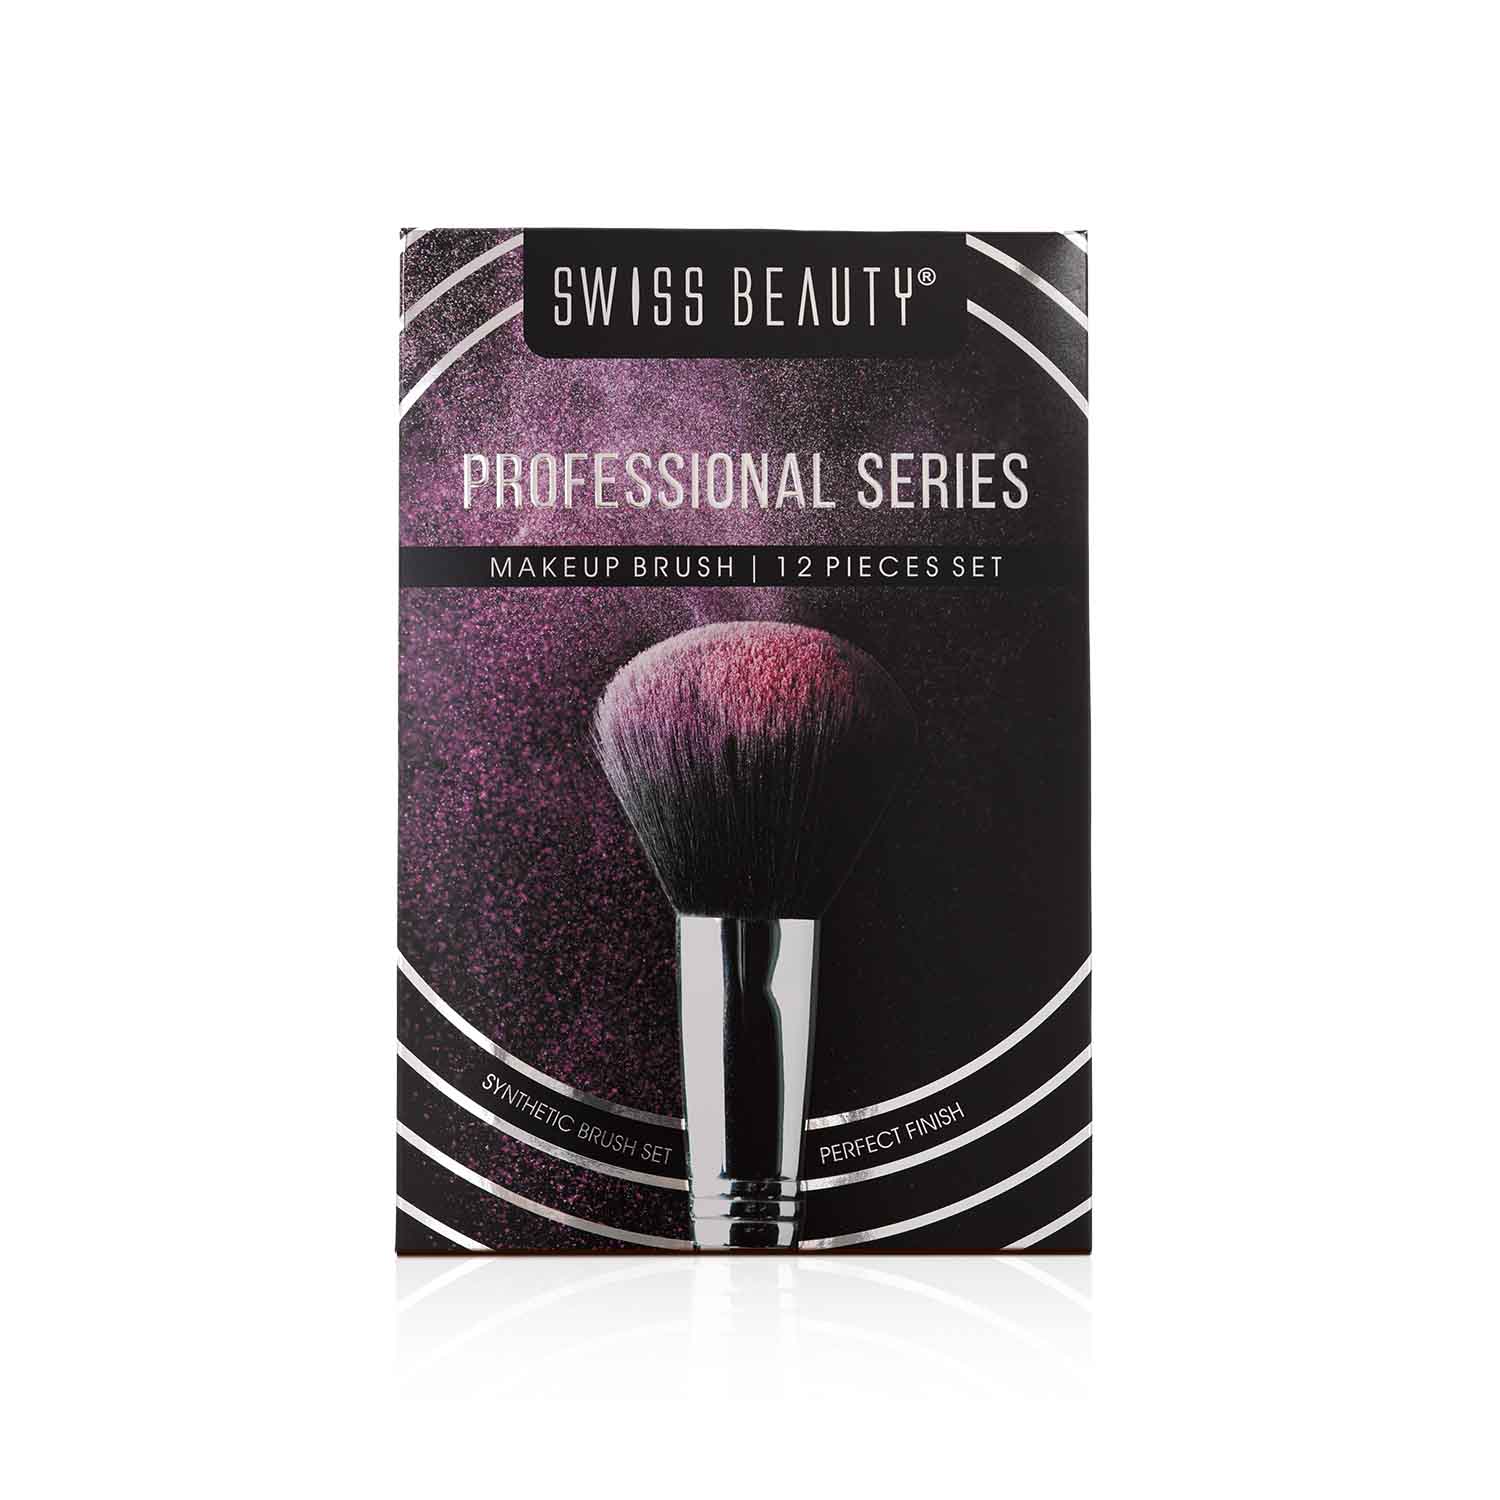 Swiss beauty precision arte makeup brush 12 PCS makeup kit set